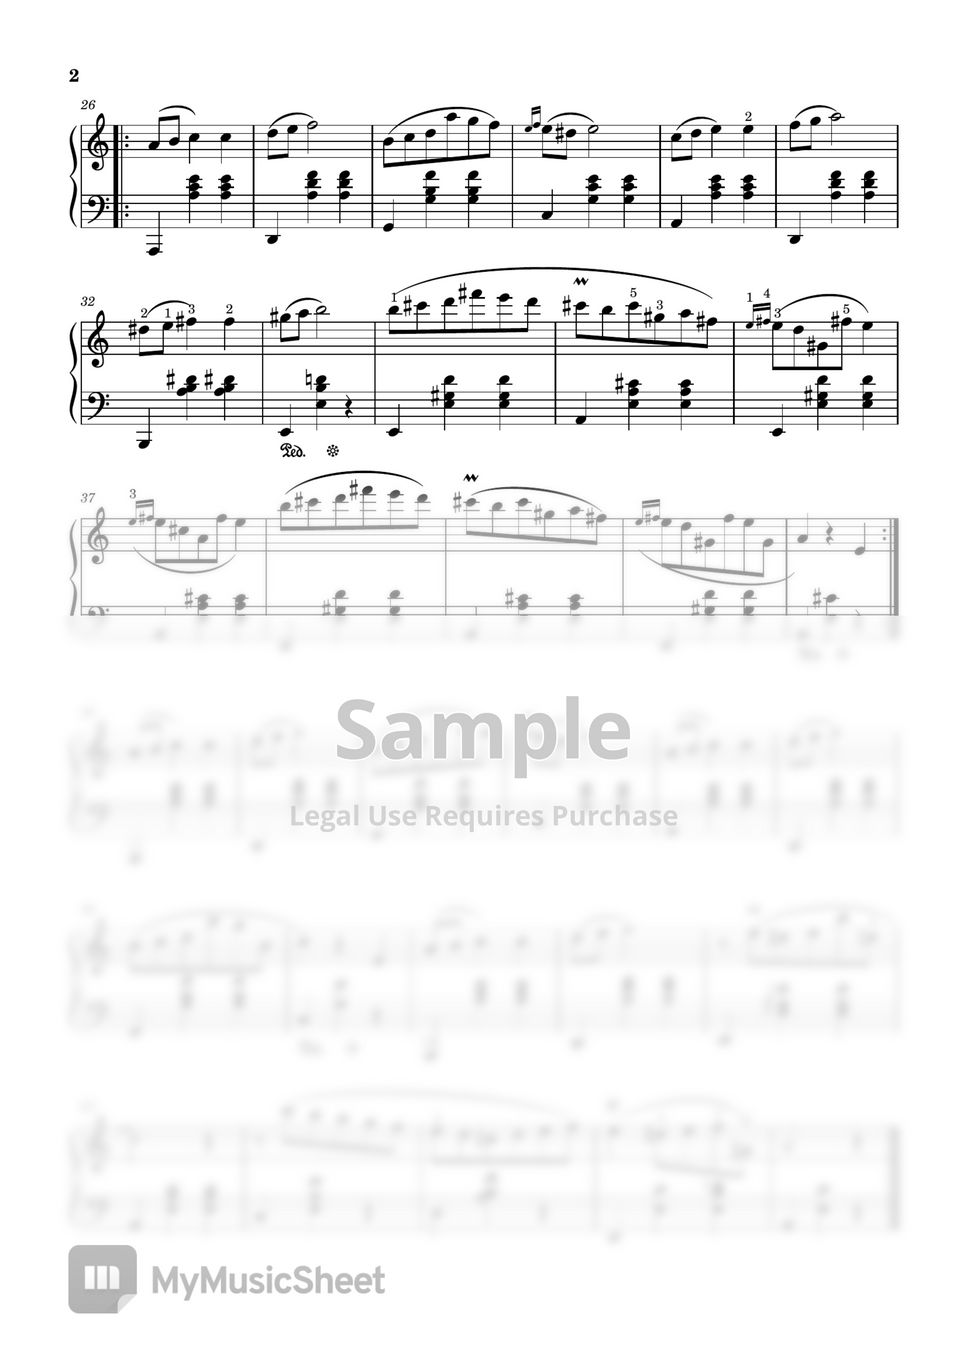 Frederic Chopin - Waltz in A minor (B. 150) by EasyPianoTutorials